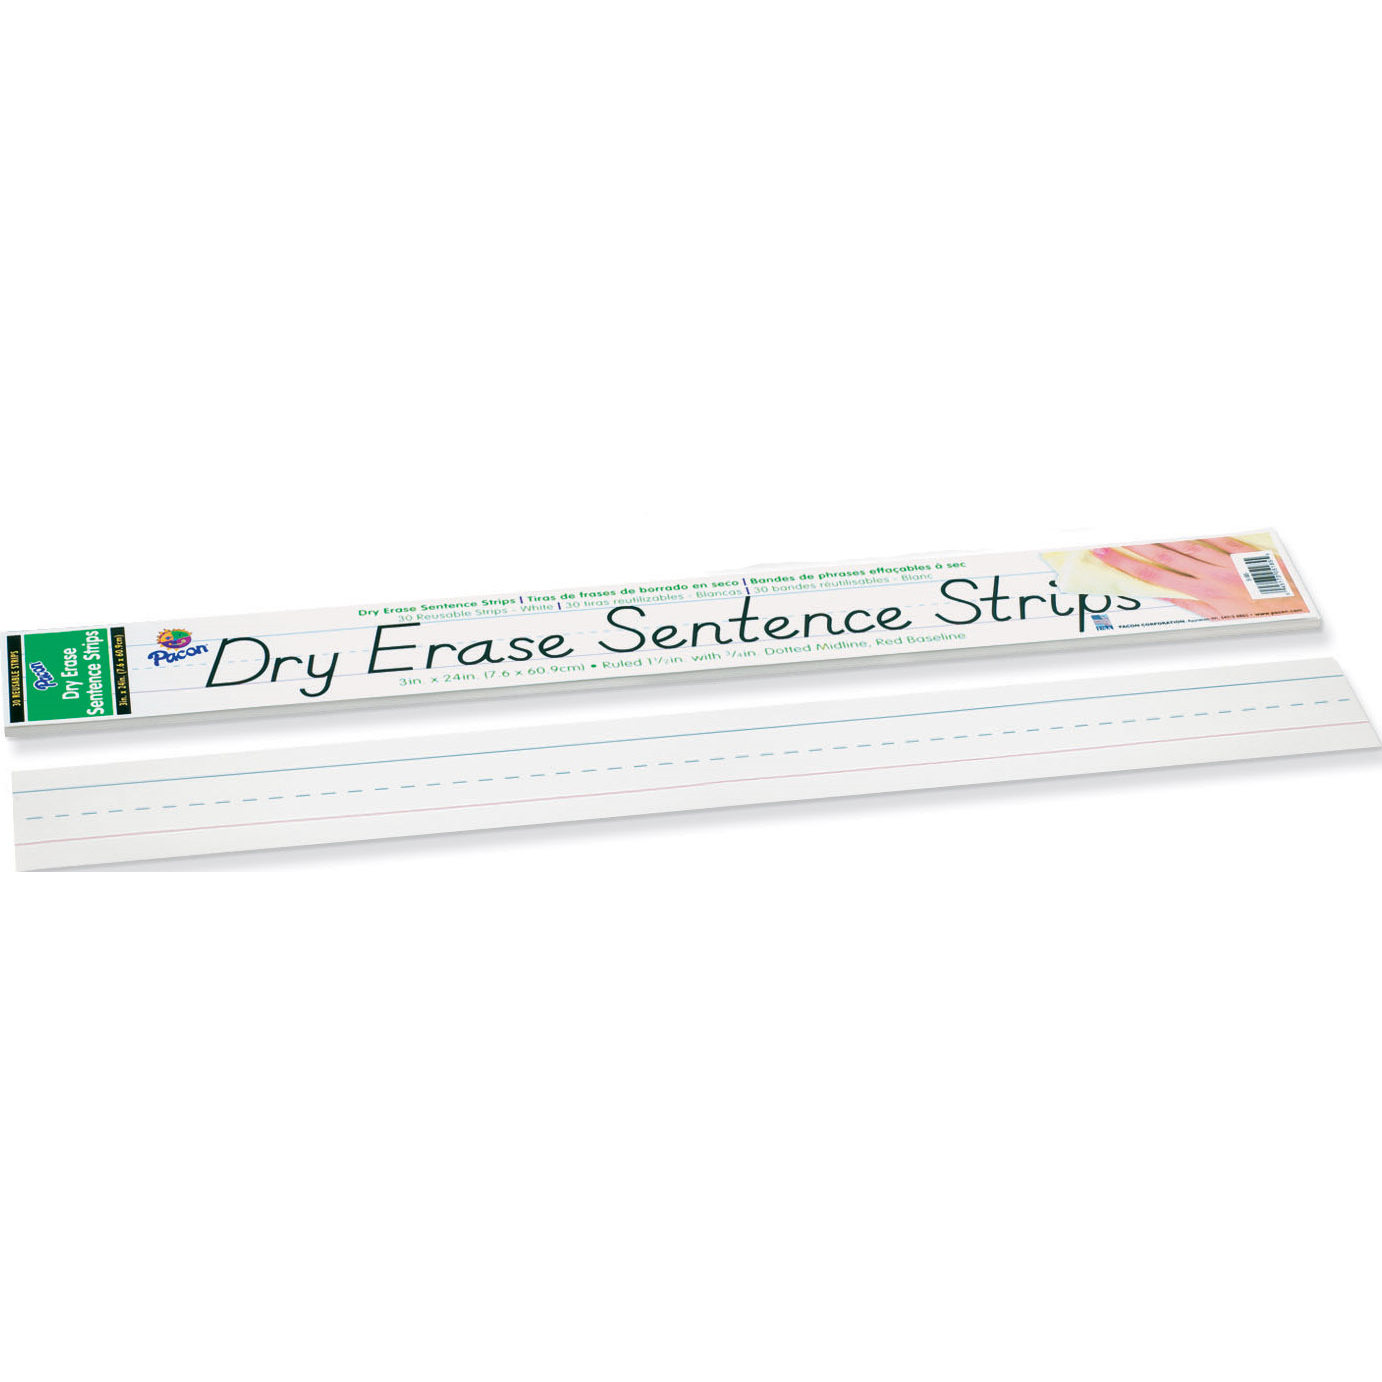 Dry-Erase Sentence and Phrase Strips